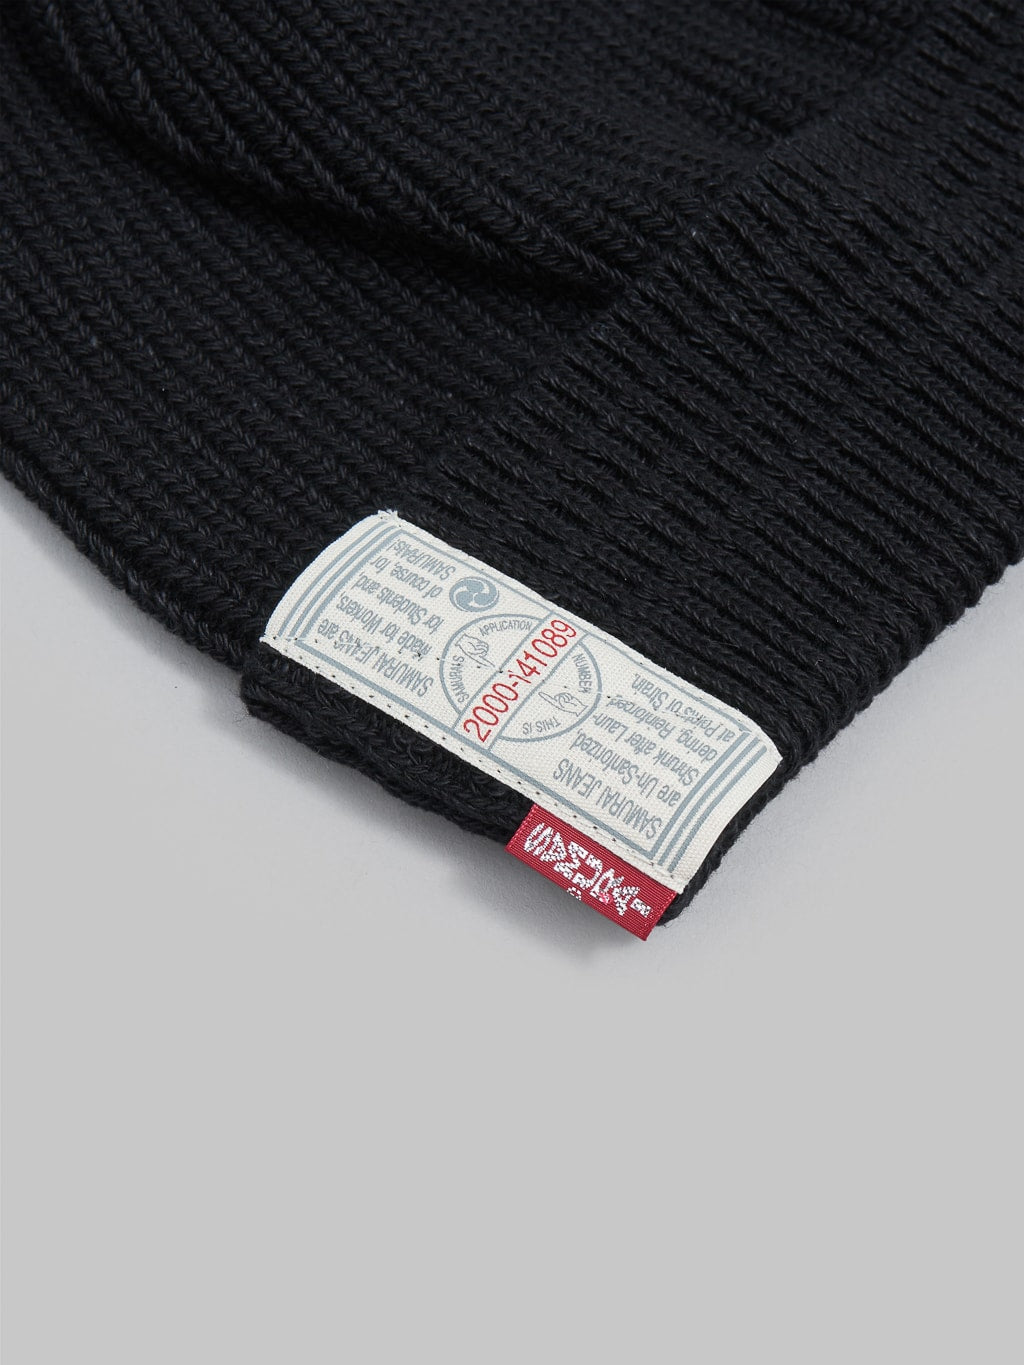 samurai watch knit cap black tag